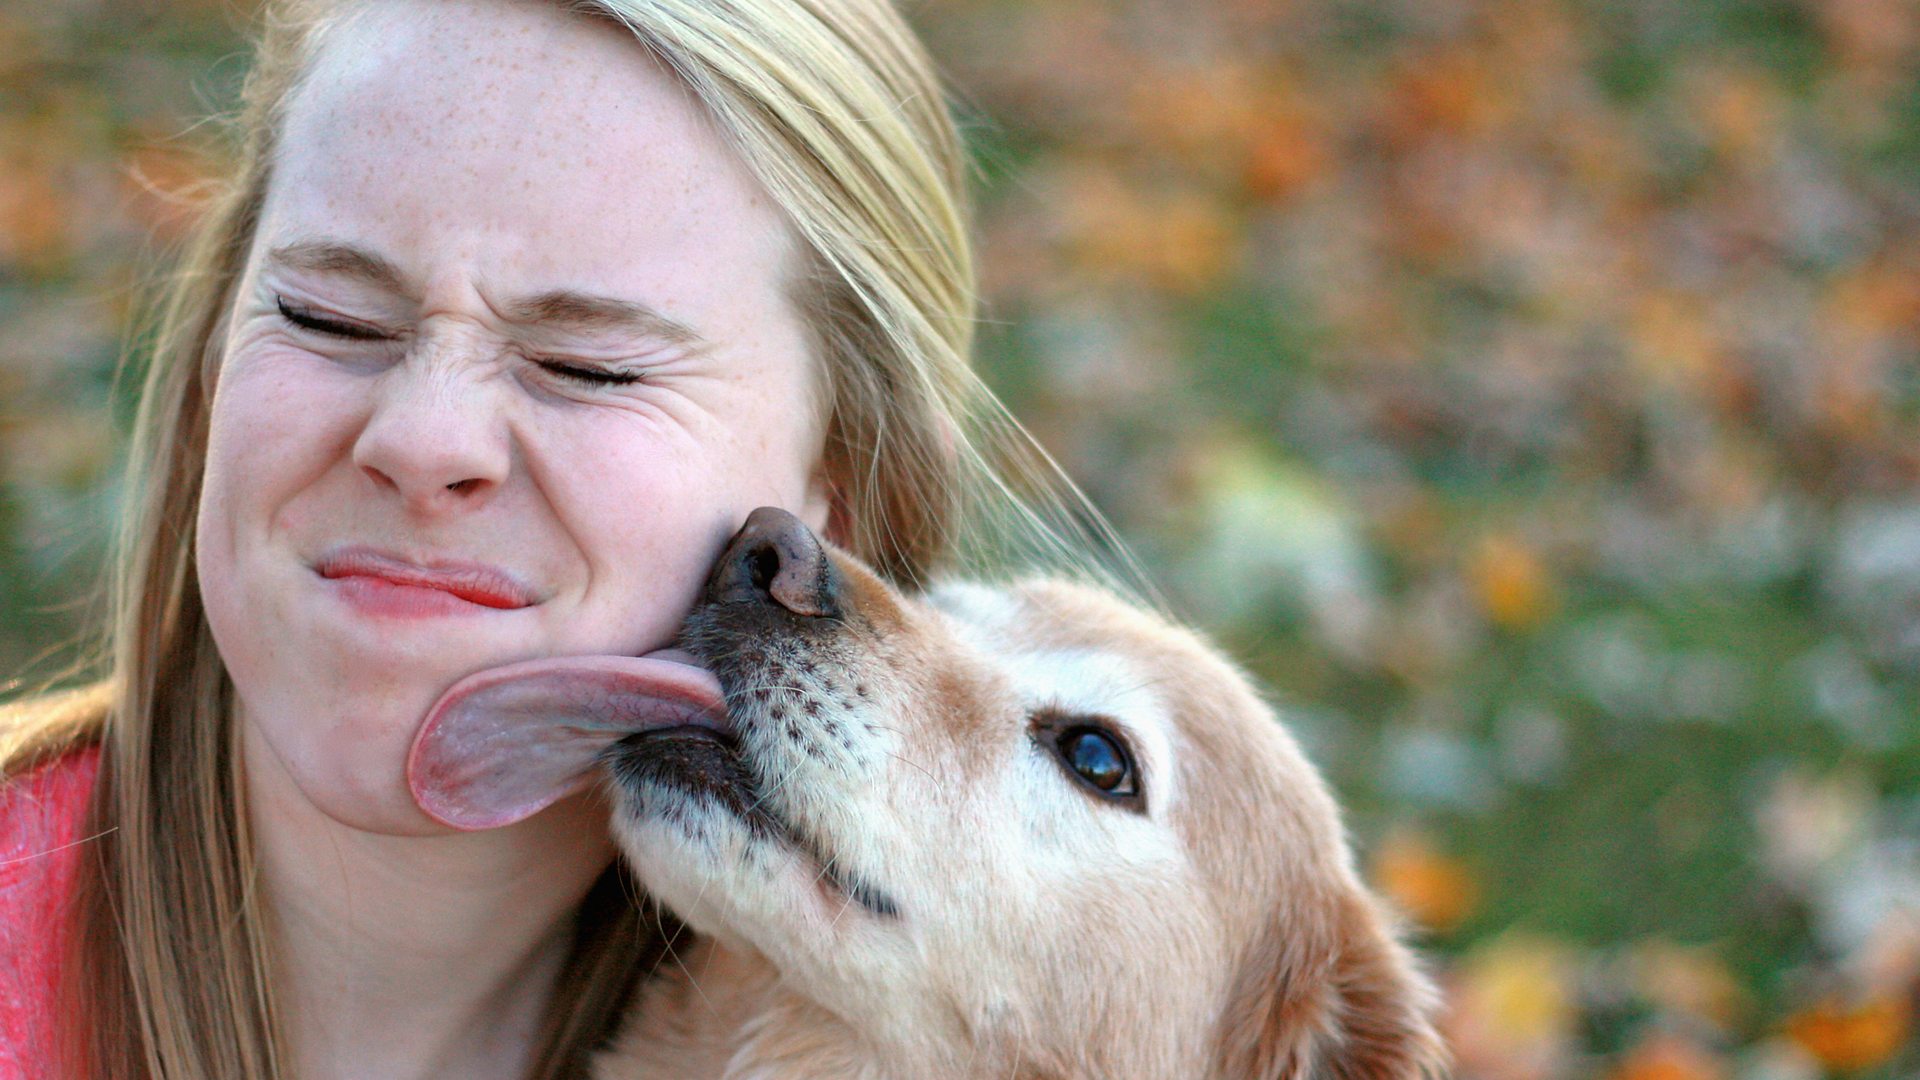 Dog cumming on face